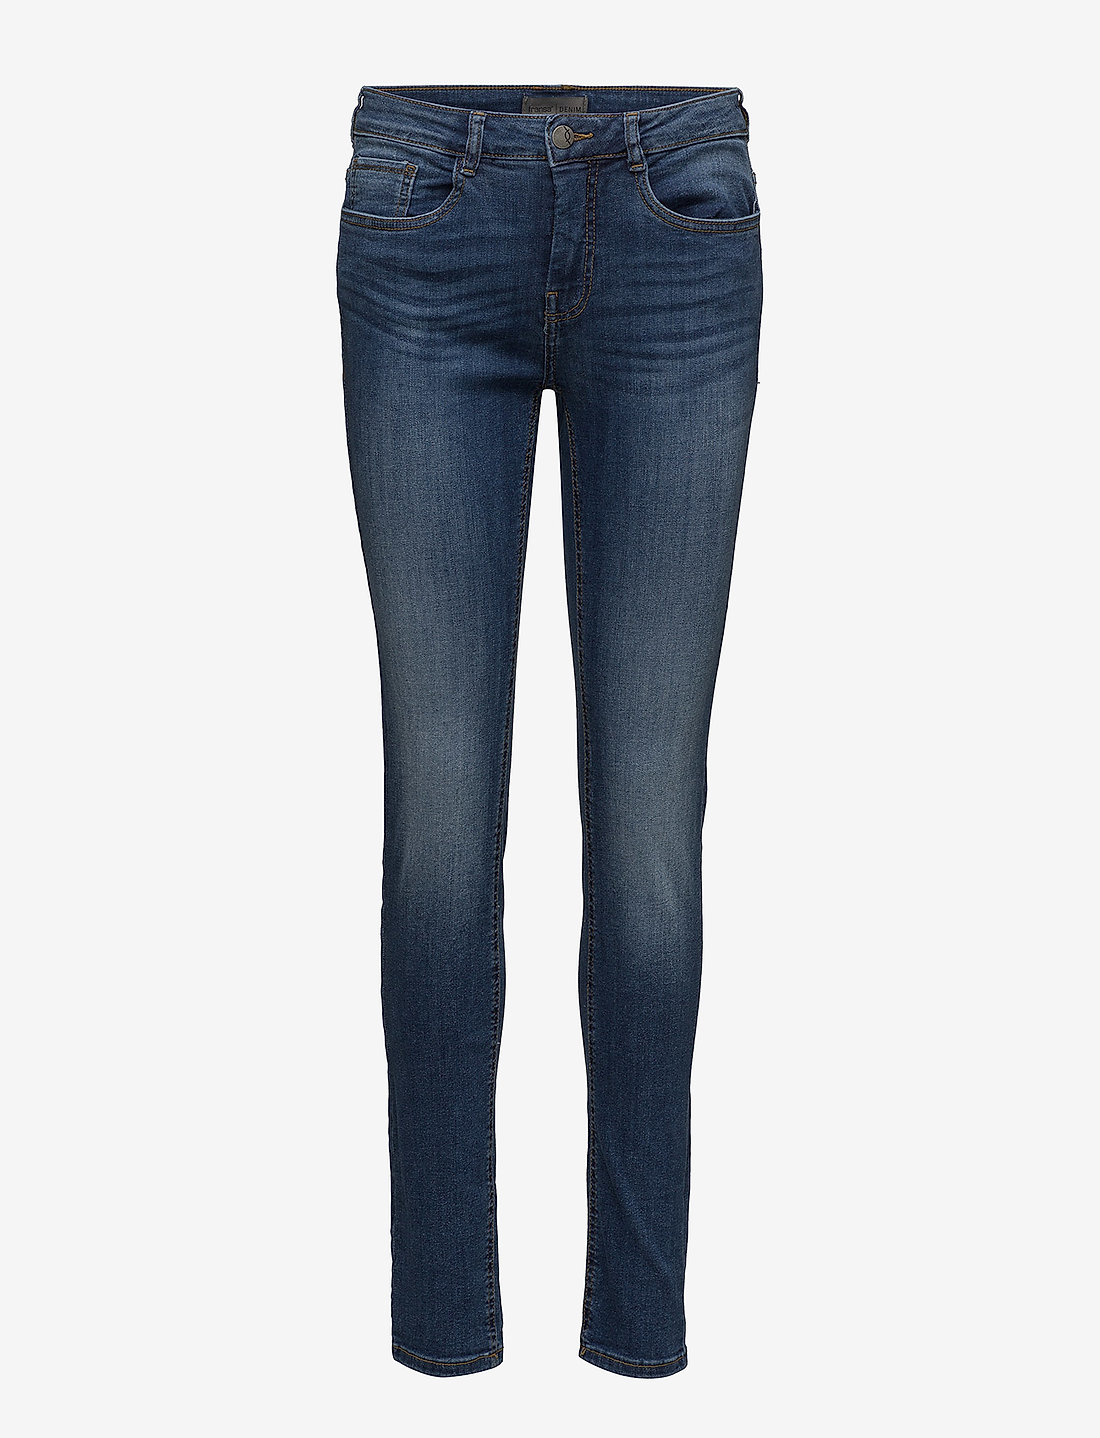 Fransa Frzoza 1 Jeans - Skinny jeans